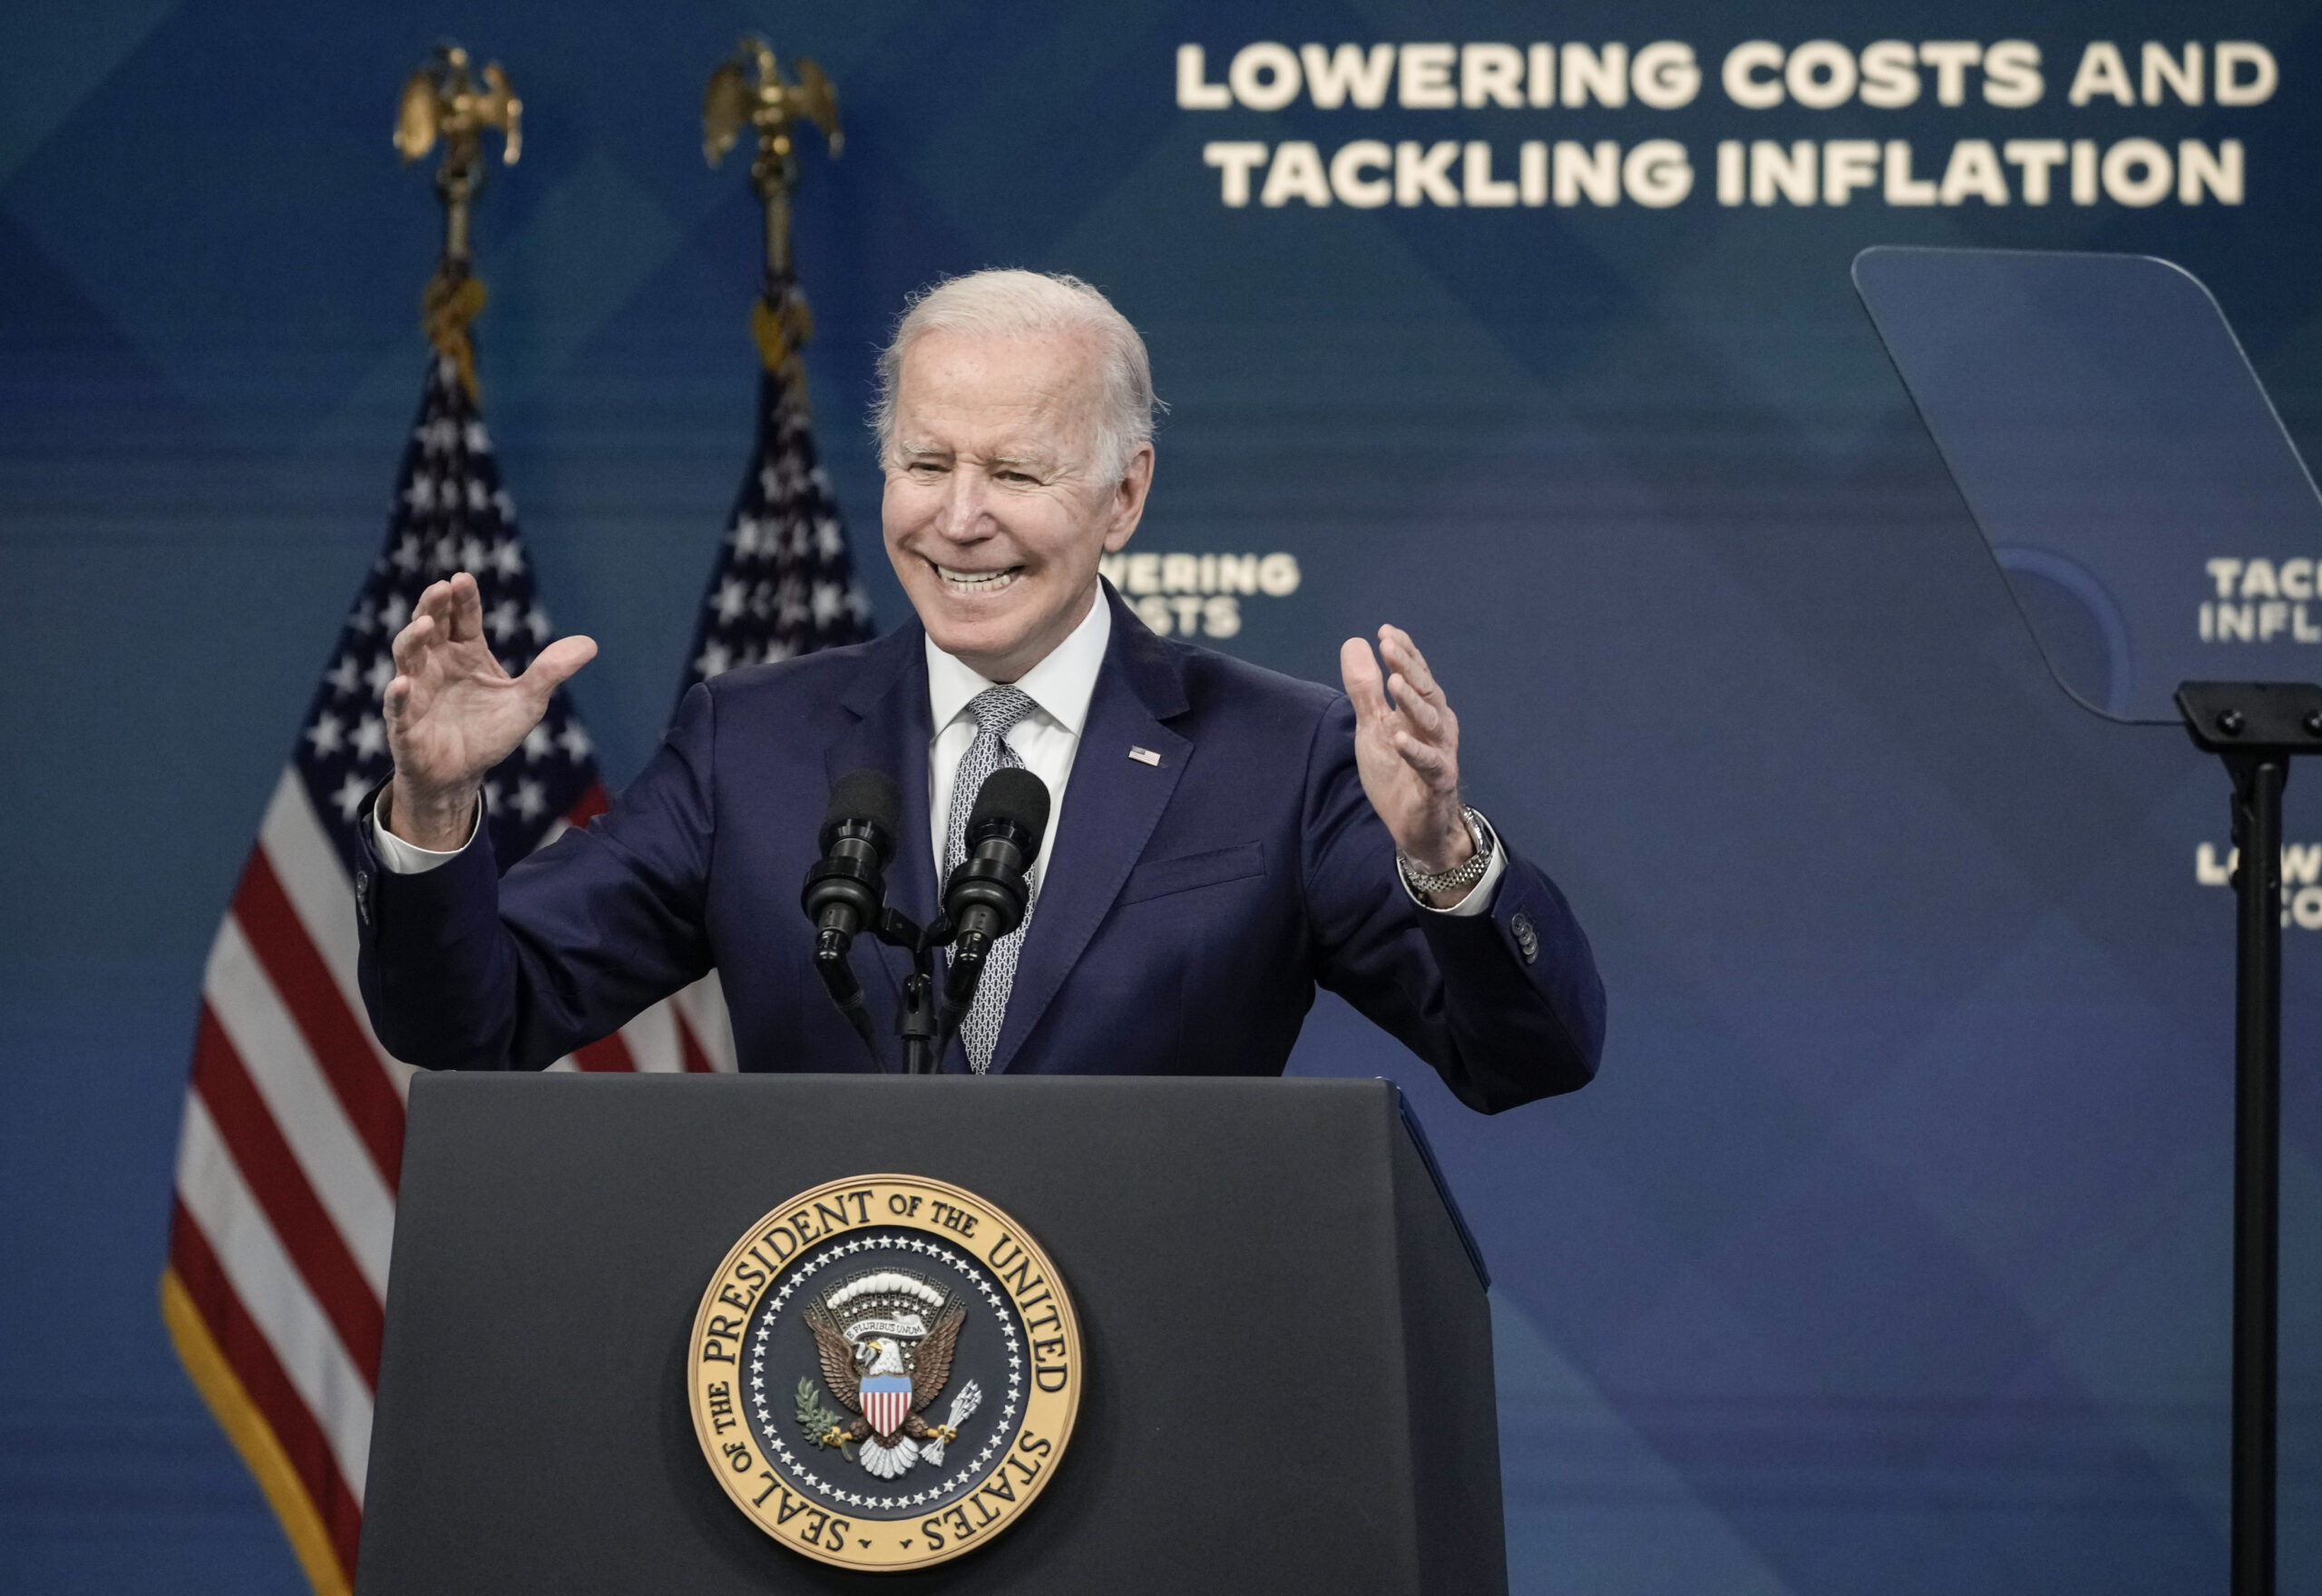 Image of Joe Biden Speaking on Inflation